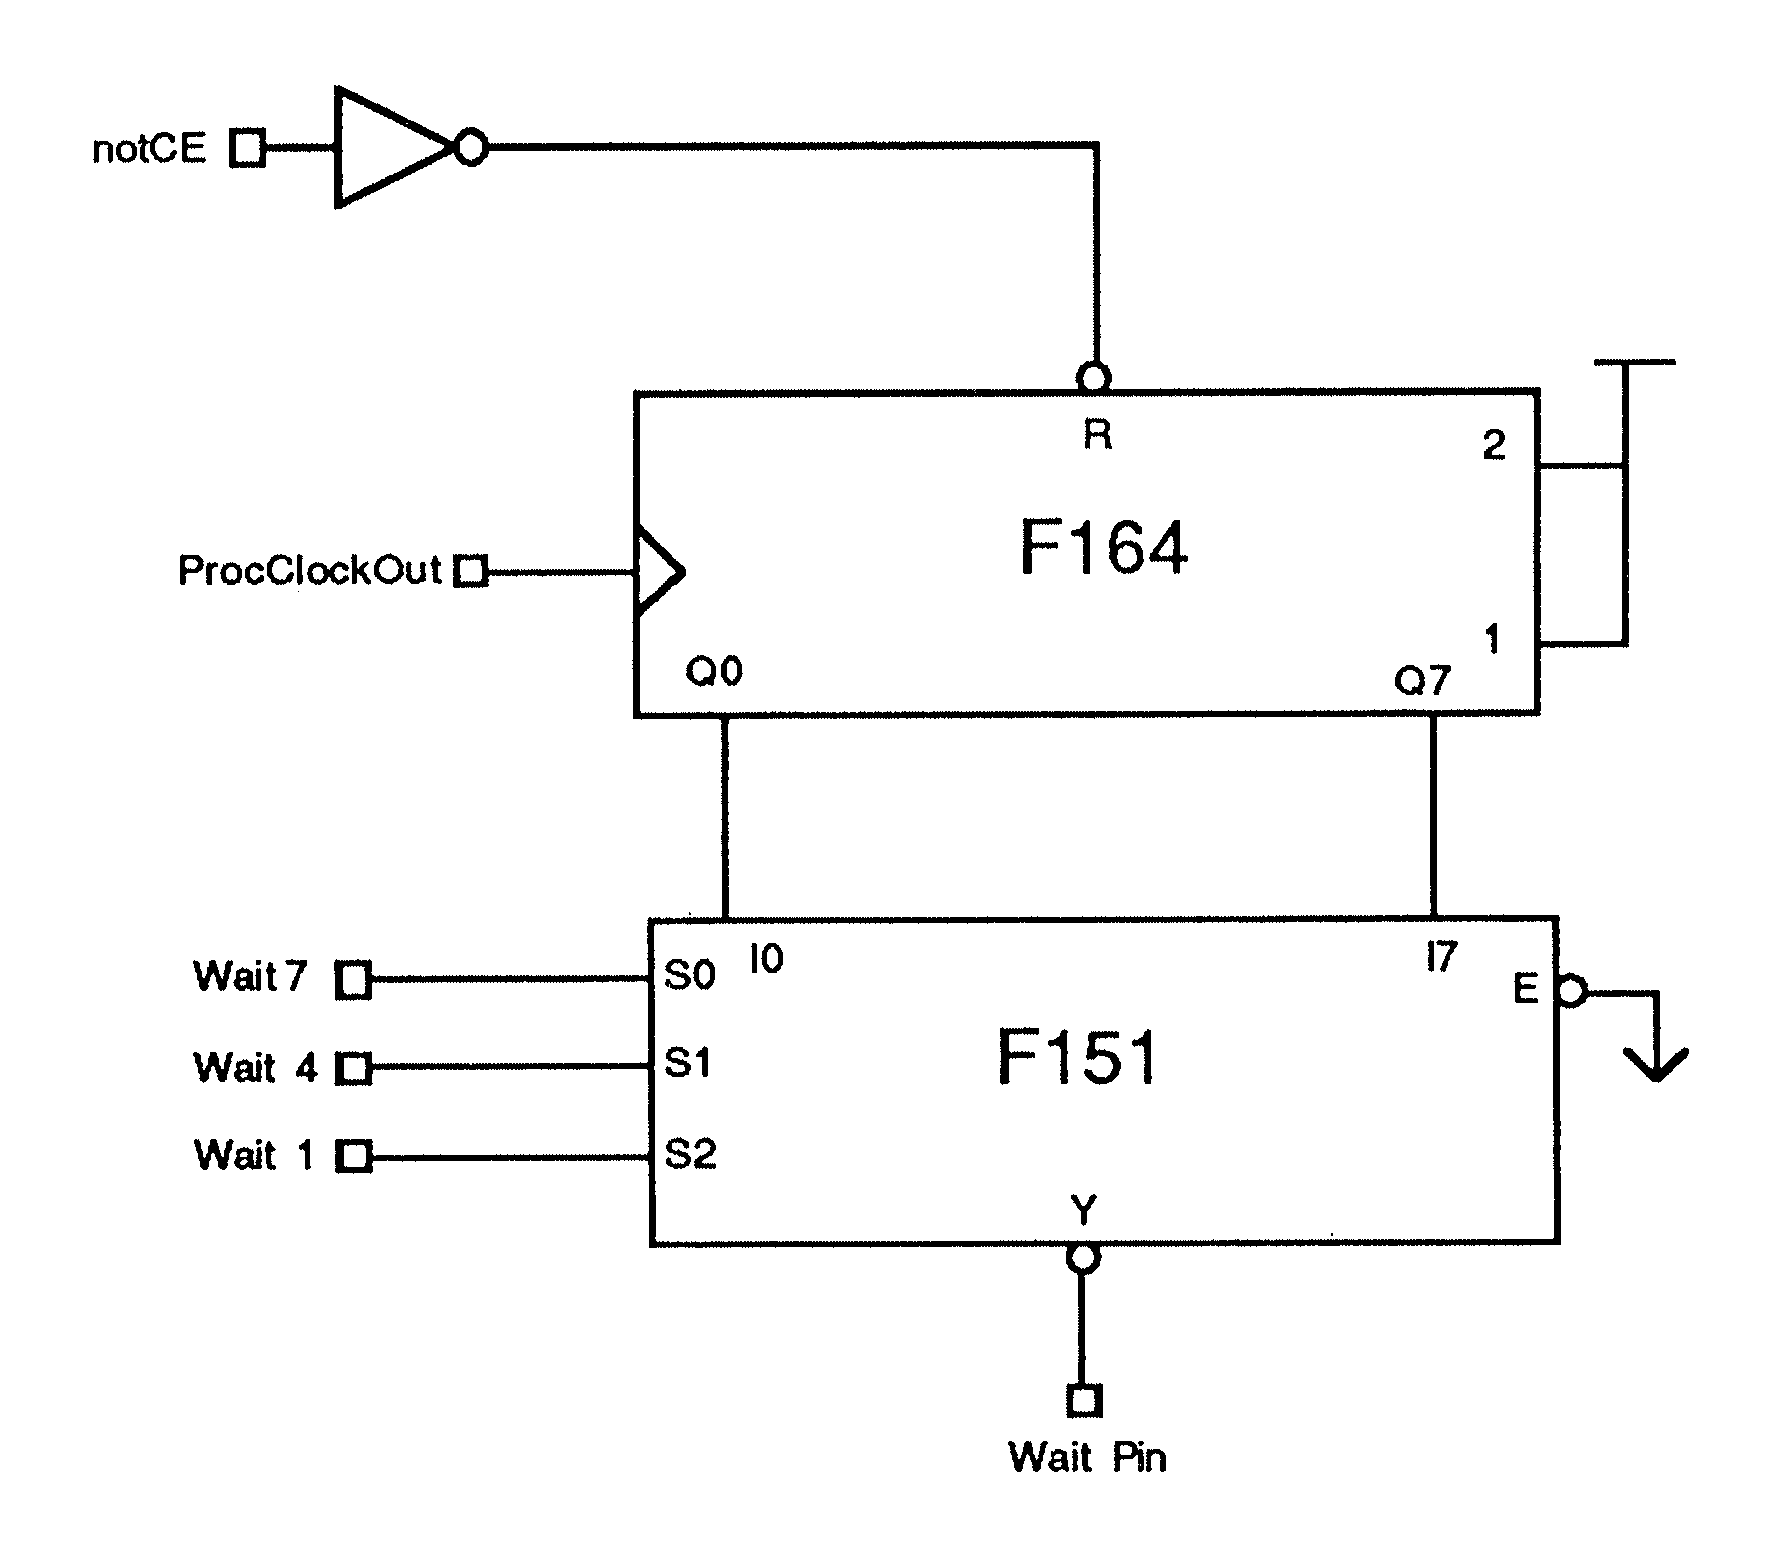 Circuit diagram of wait state
generator